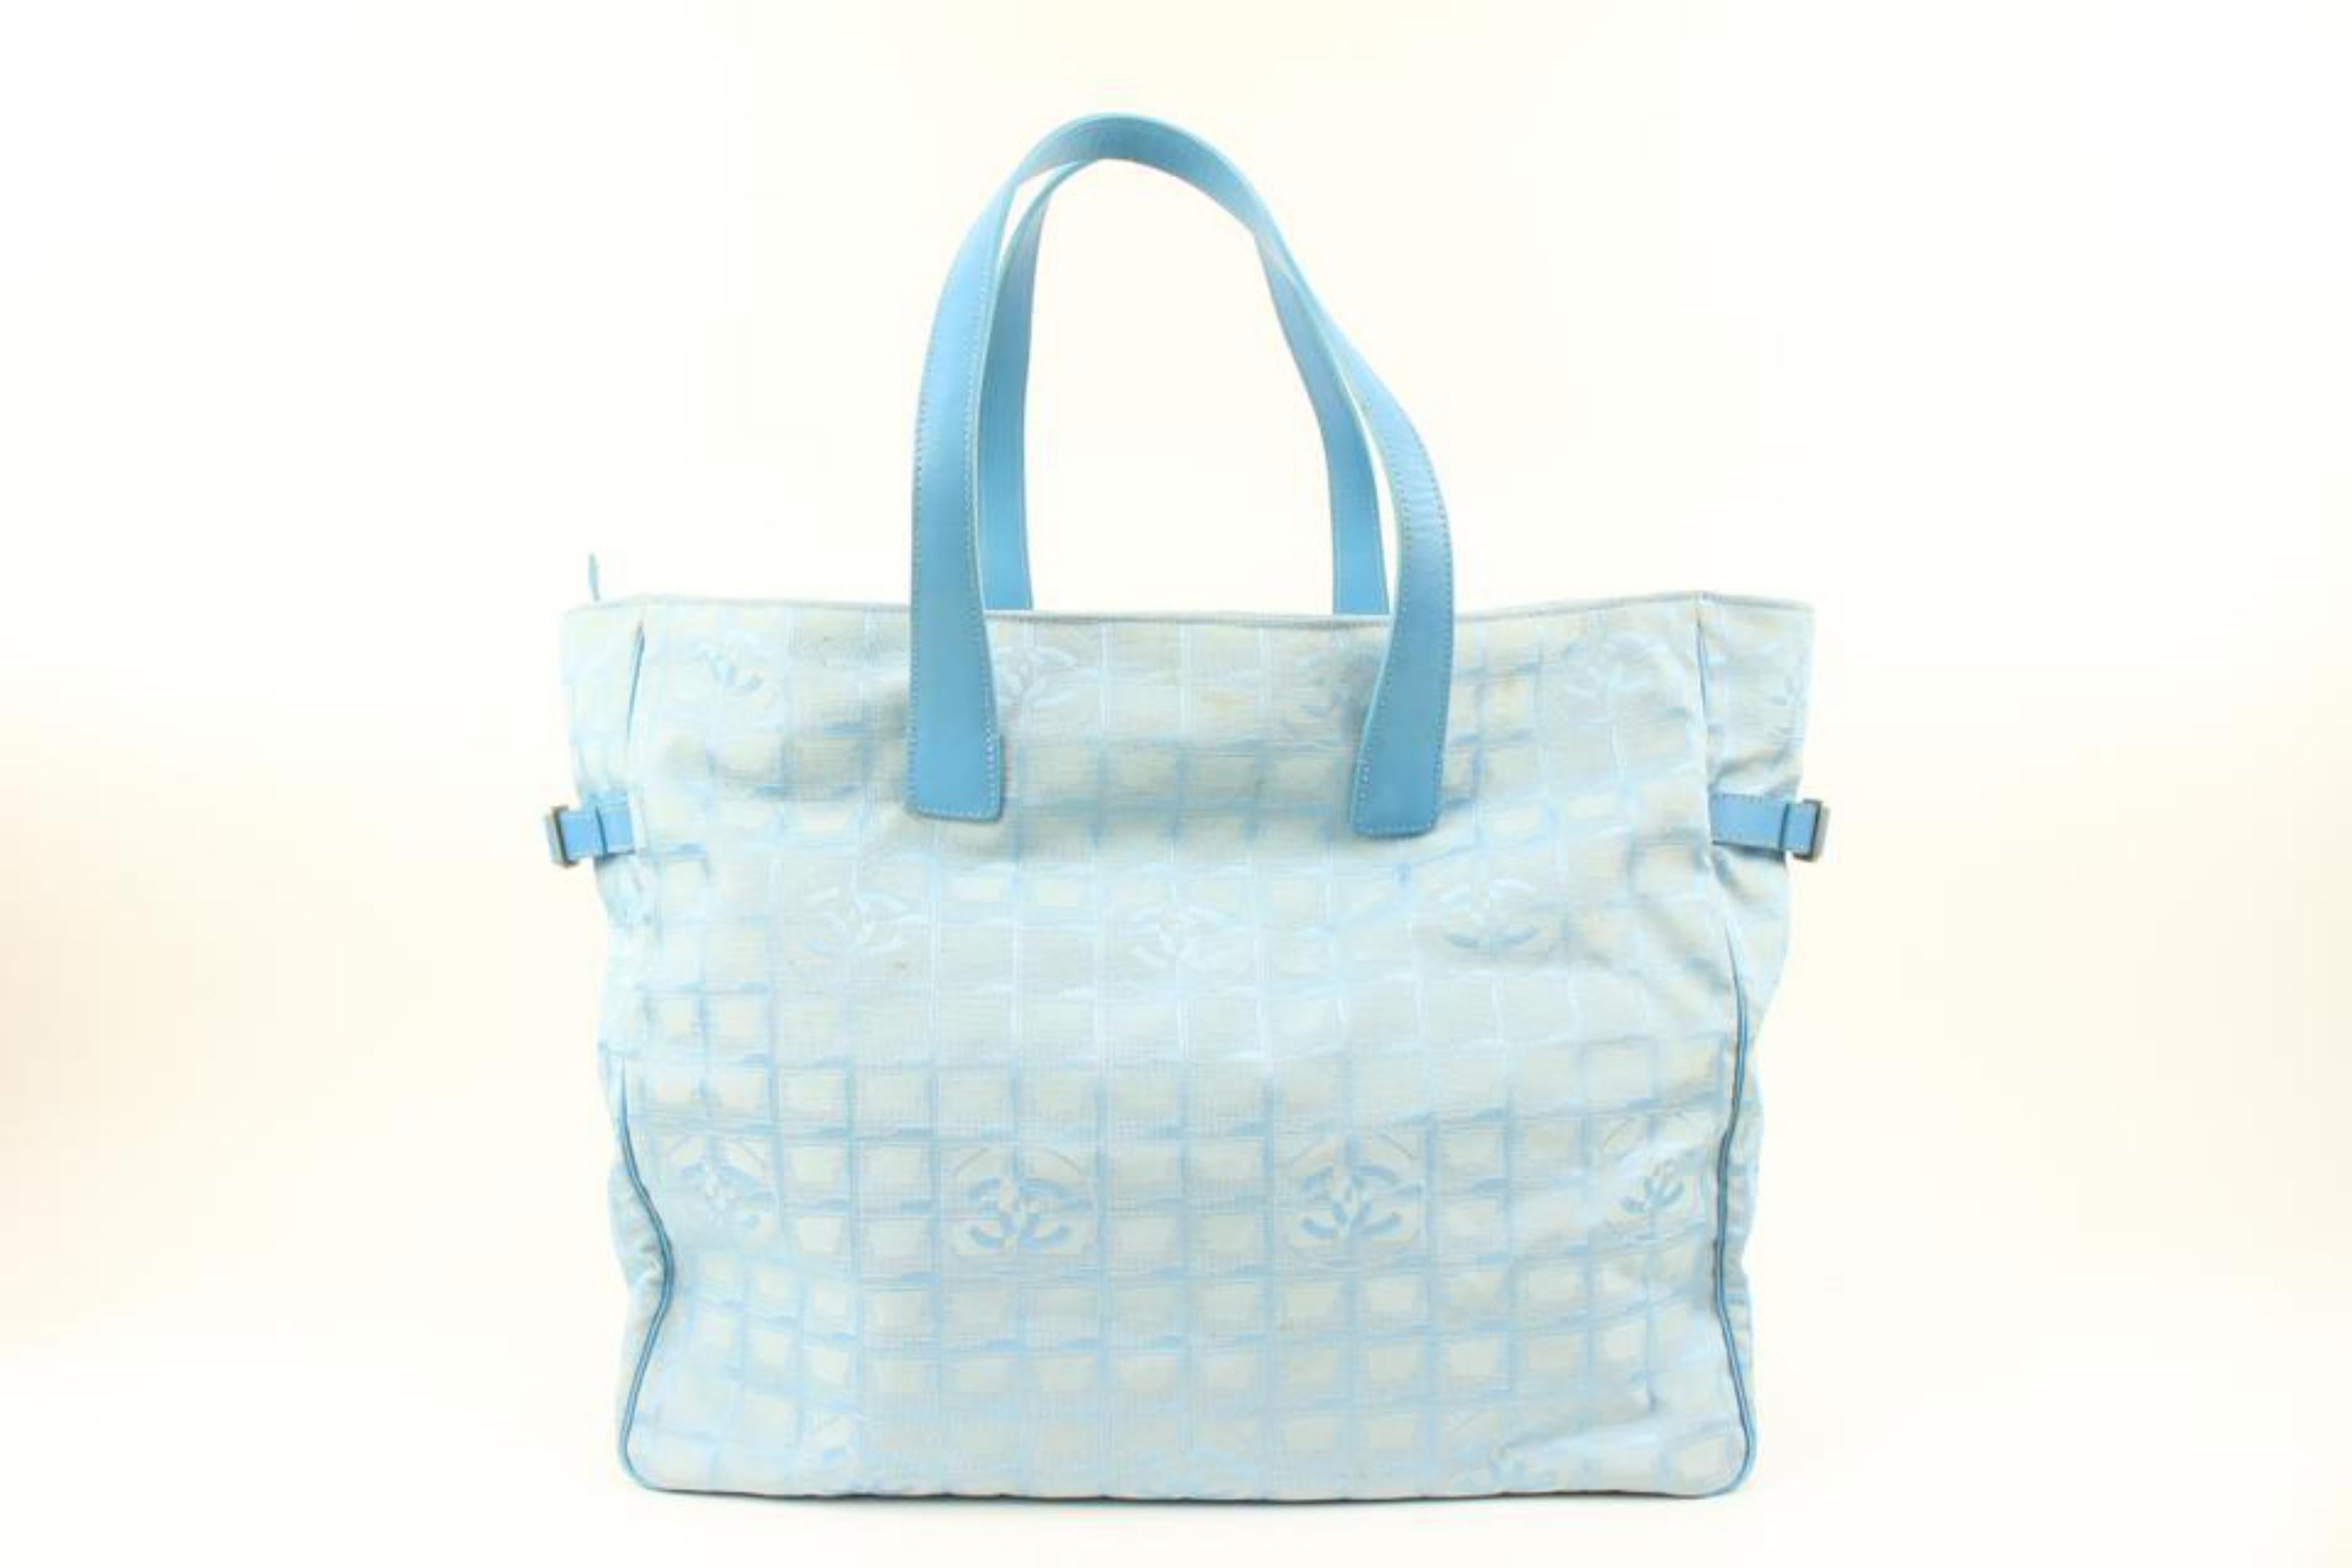 Chanel Large Blue New Line Shopper Tote GM Bag 67ck32s 3